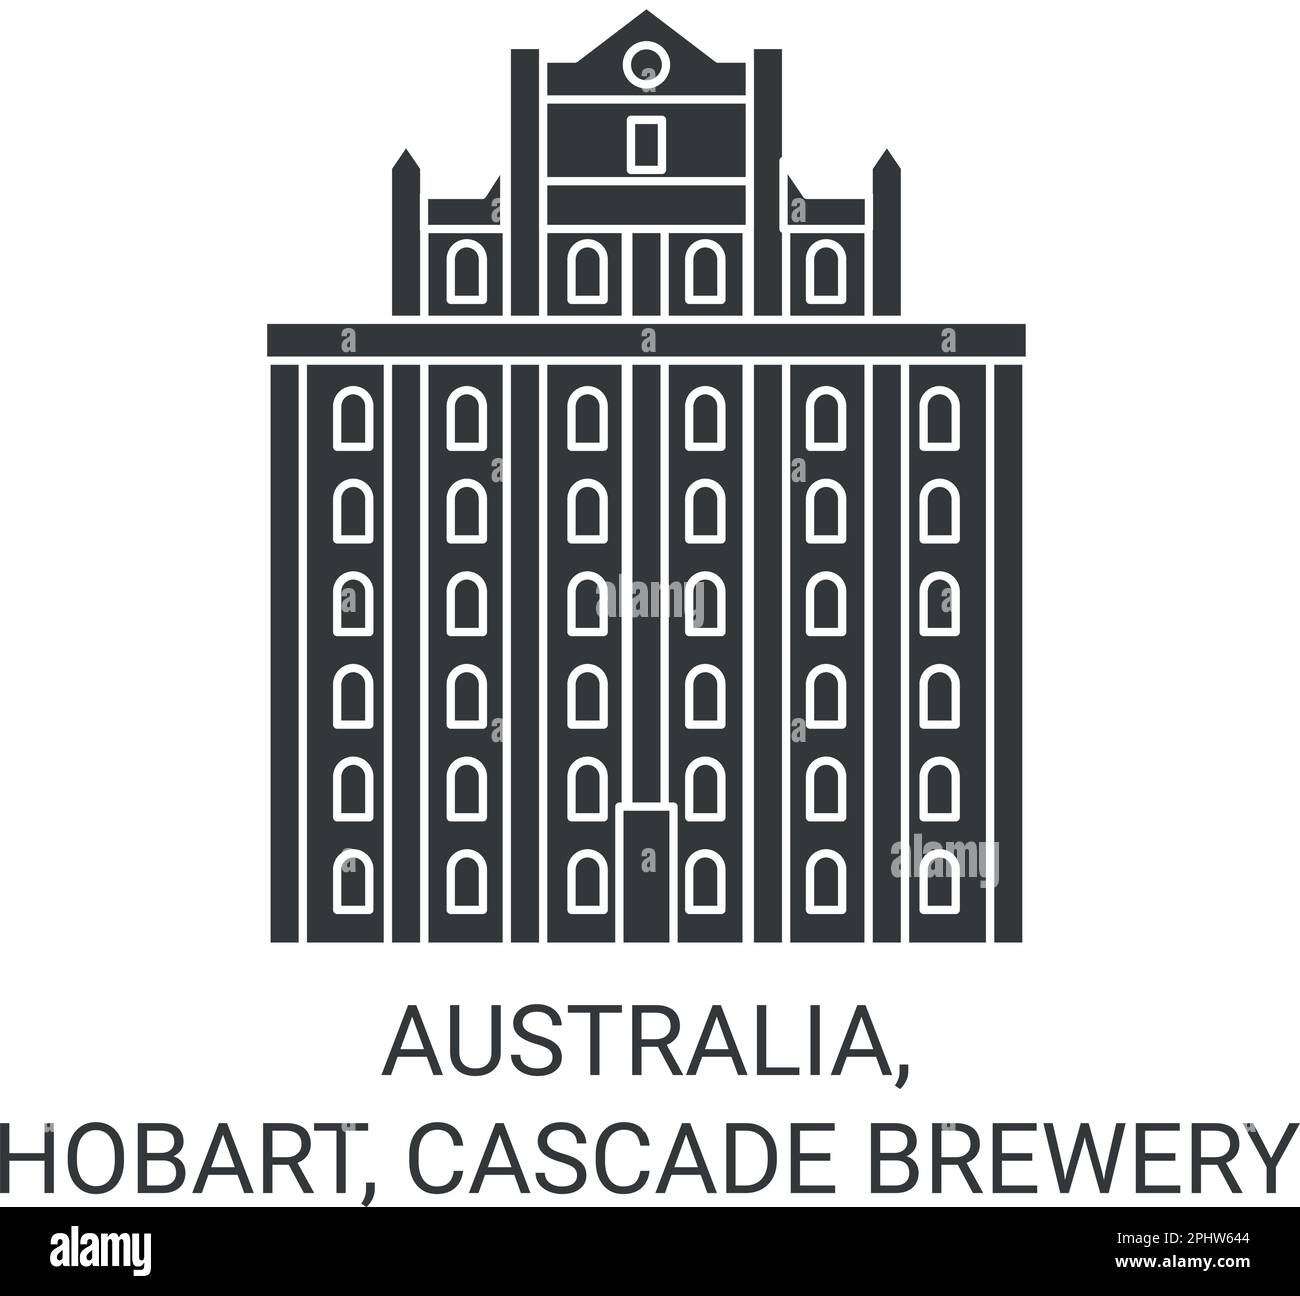 Australien, Hobart, Cascade Brewery, Reiseziel-Vektordarstellung Stock Vektor